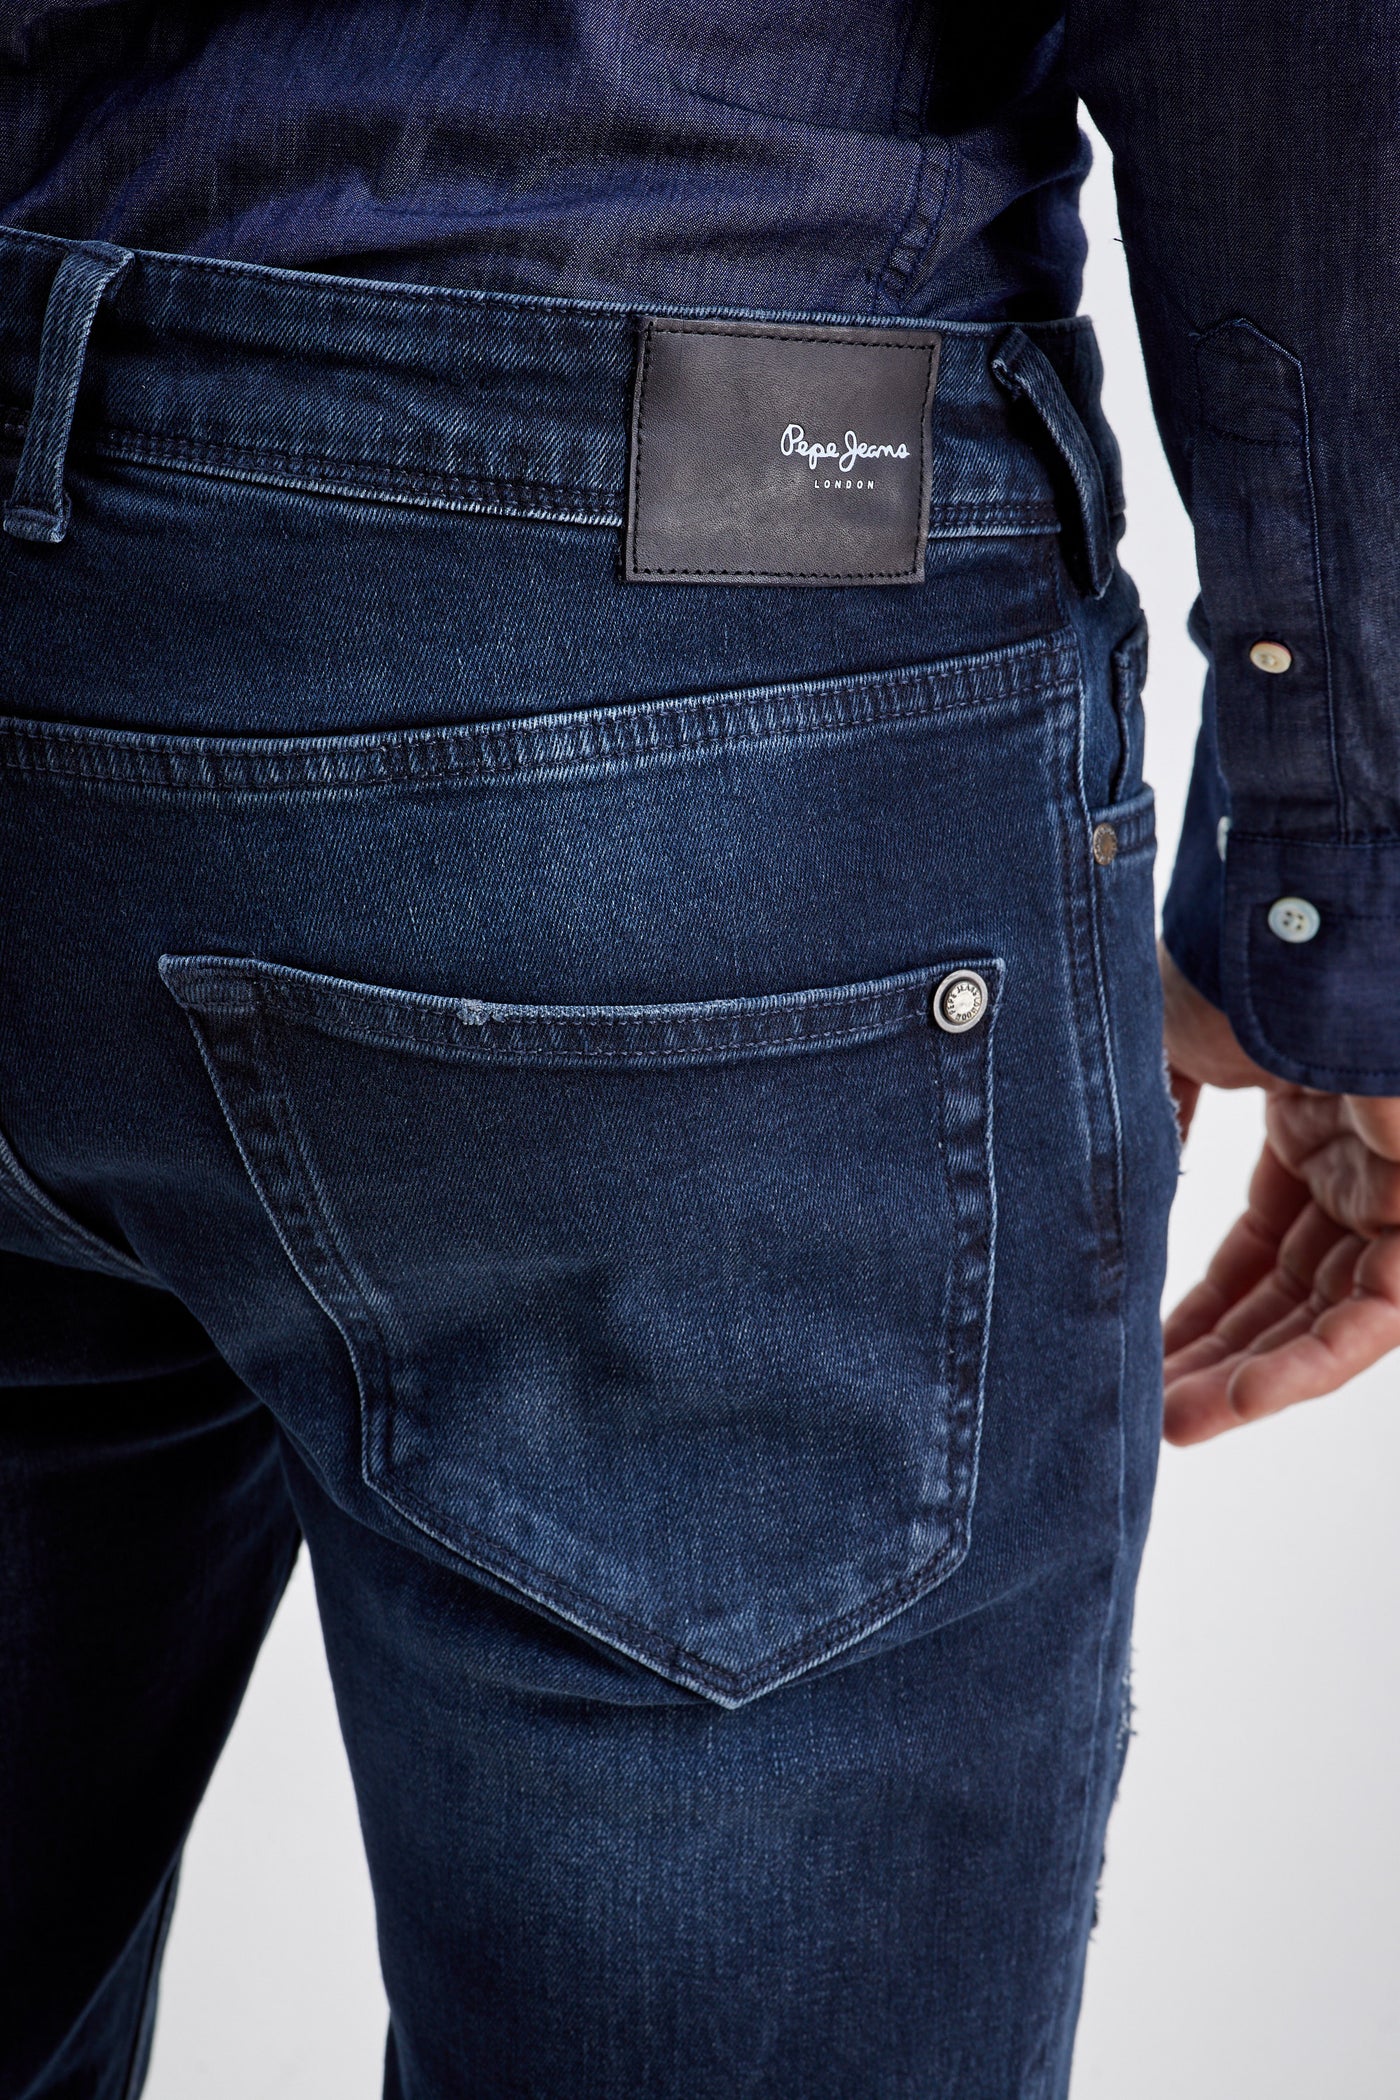 מכנס ג'ינס סקיני בצבע כחול כהה